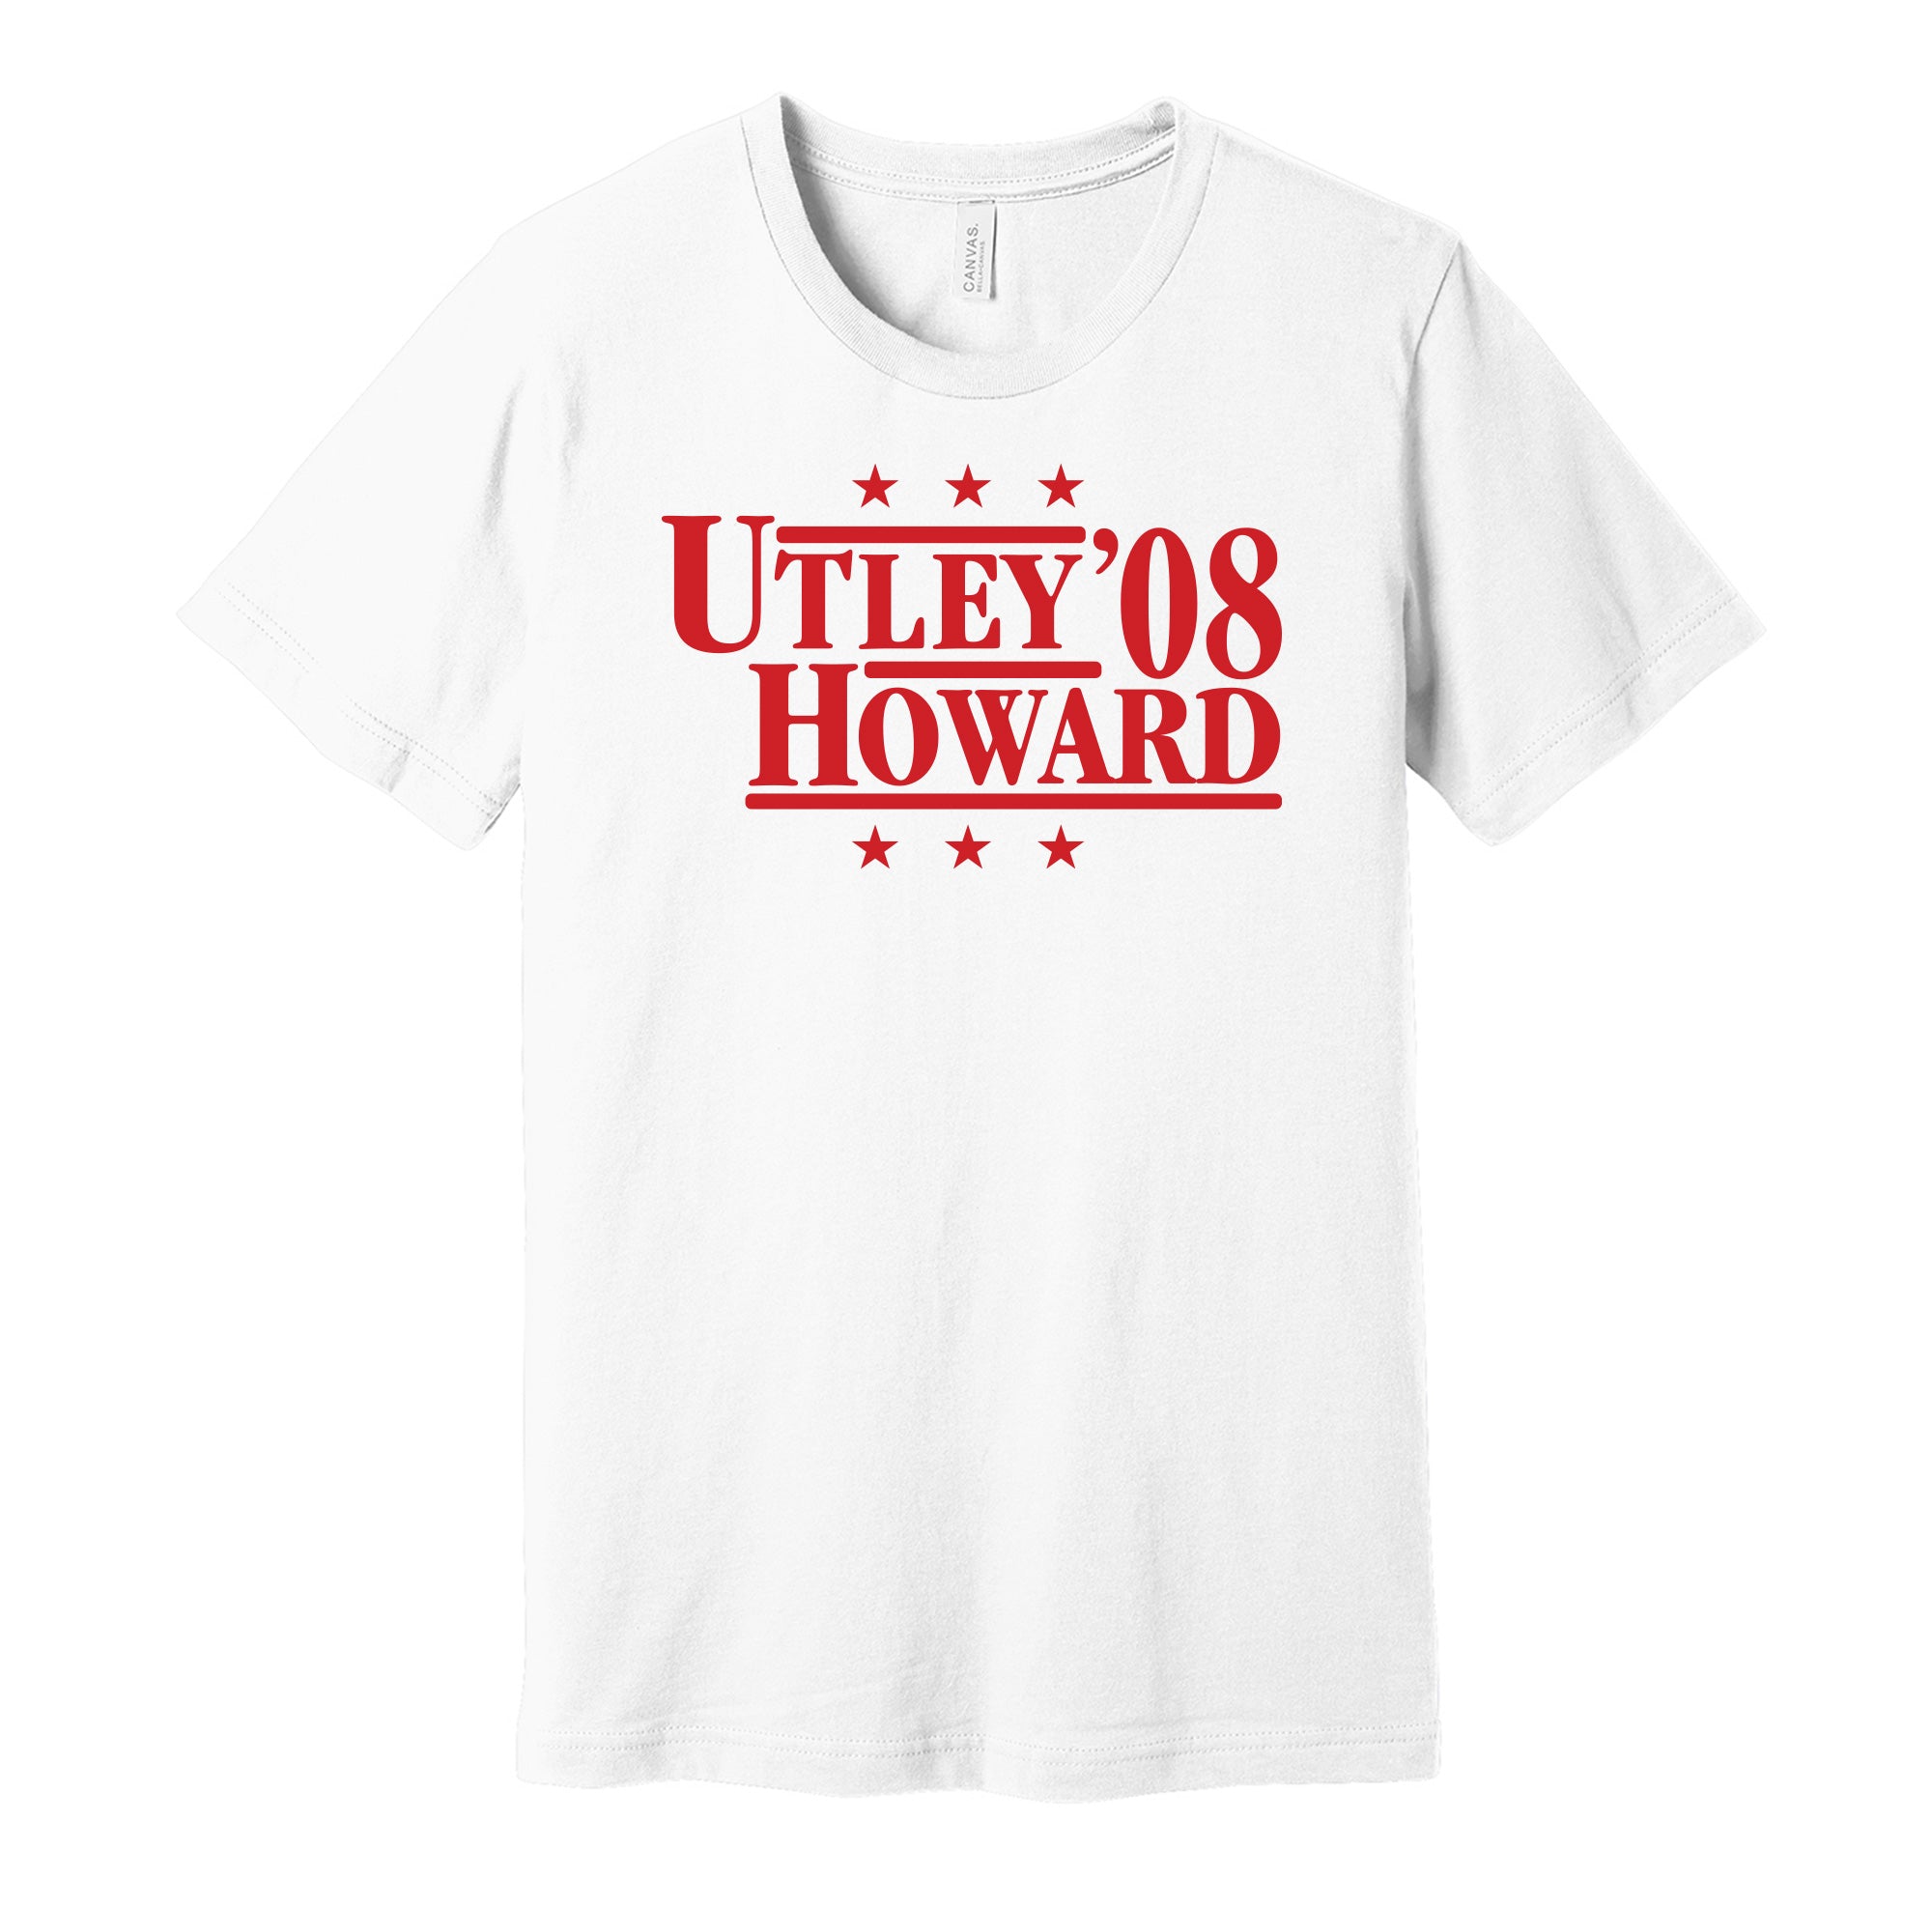 Utley & Howard '08 - Philadelphia Baseball Legends Political Campaign Parody T-Shirt - Hyper Than Hype Shirts XS / White Shirt